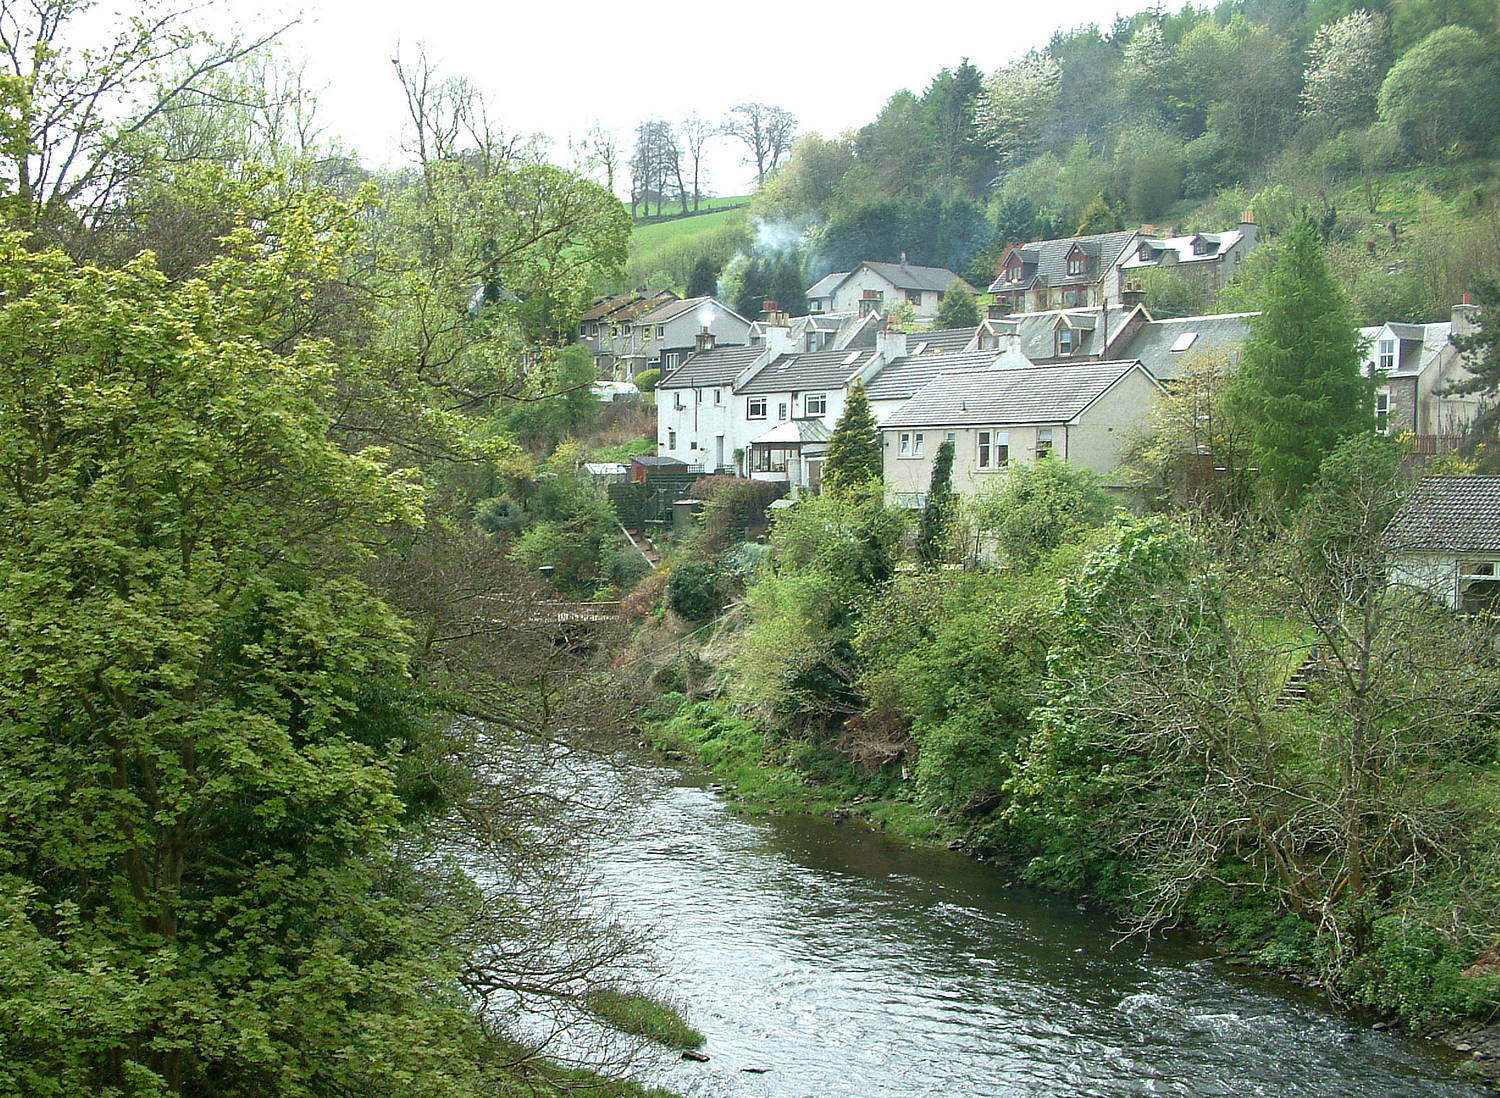 View upstream from the old bridge at Kirkfieldbank